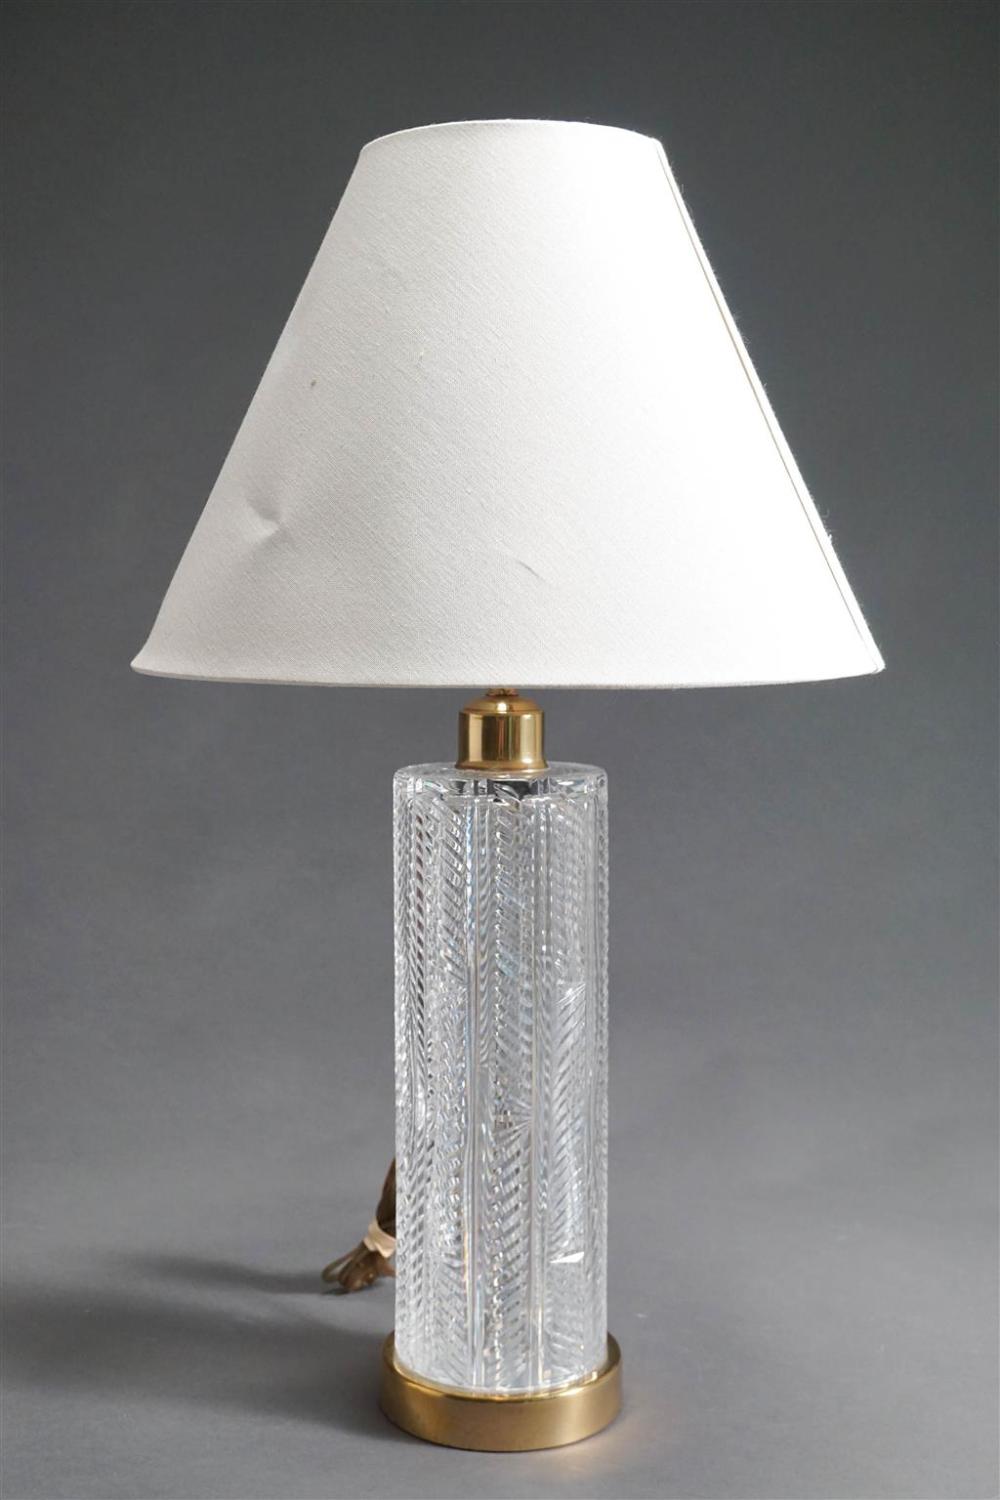 CUT GLASS TABLE LAMP H 25 1 2 327ecf